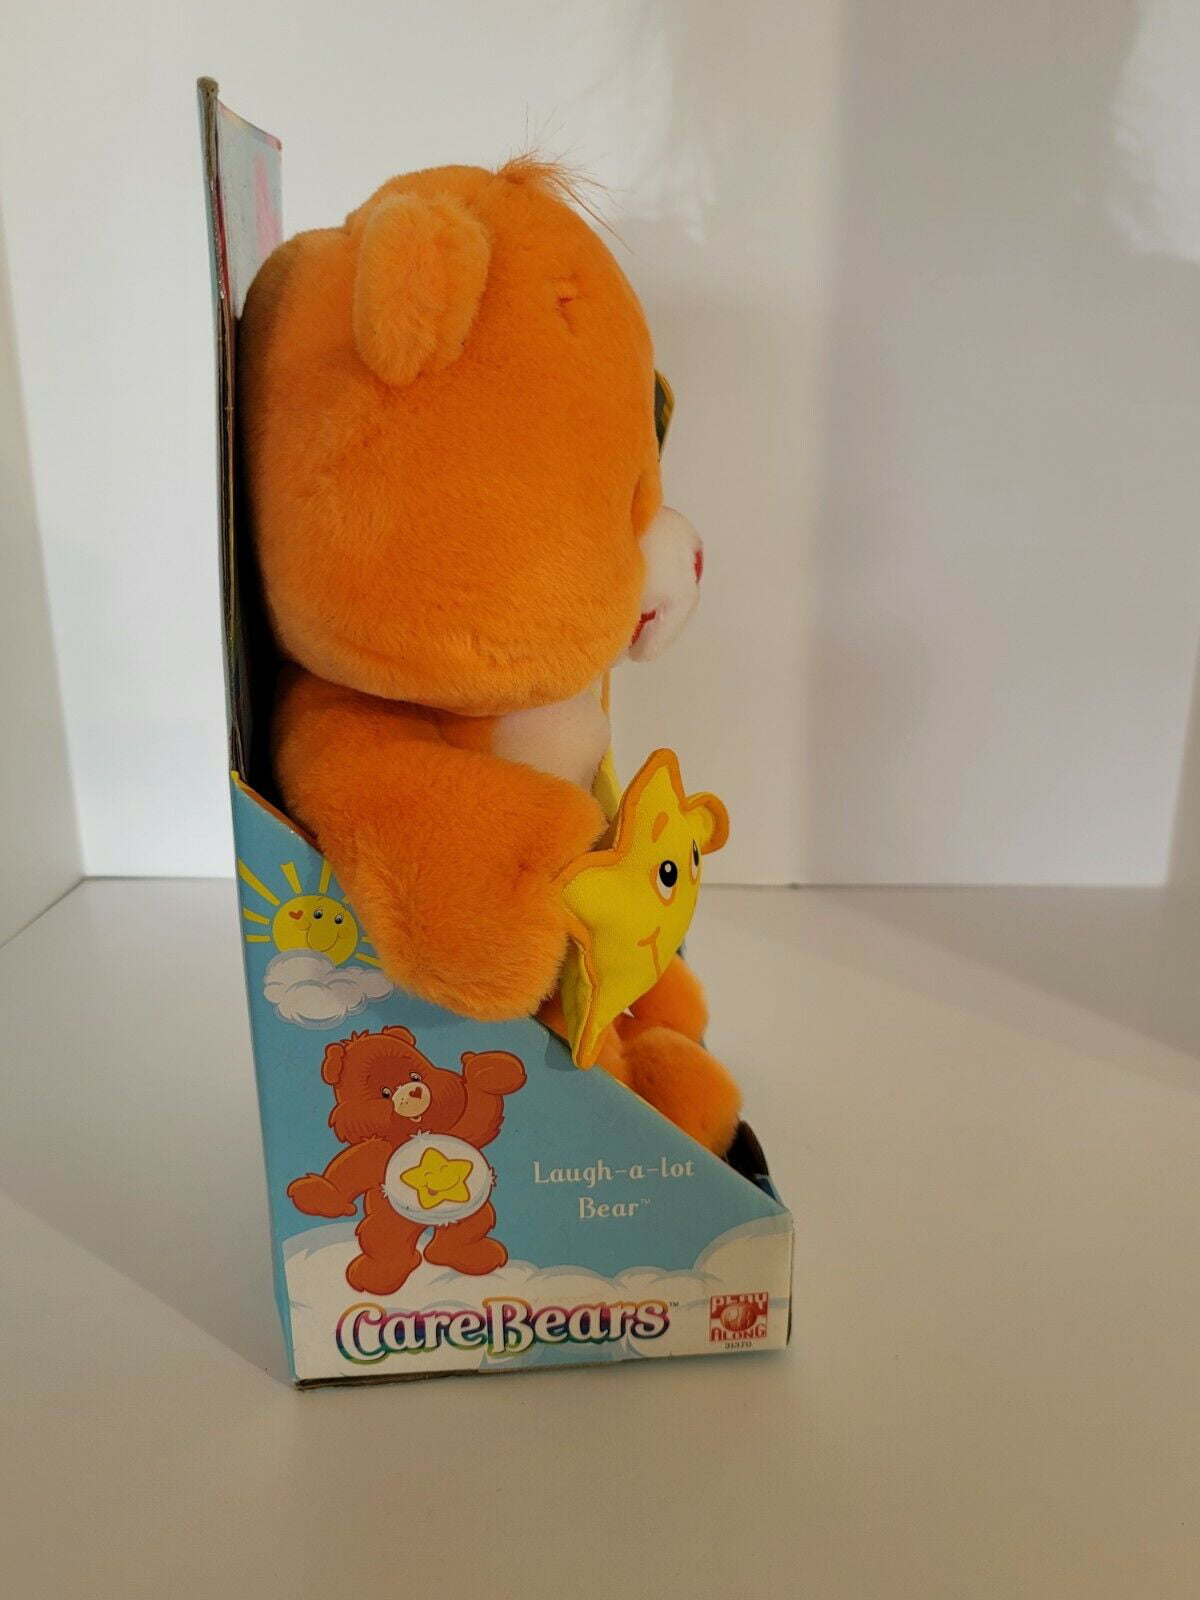 Care Bears Laugh-a-lot Bear 2003 13” Star Orange Stuffed Plush for sale online 